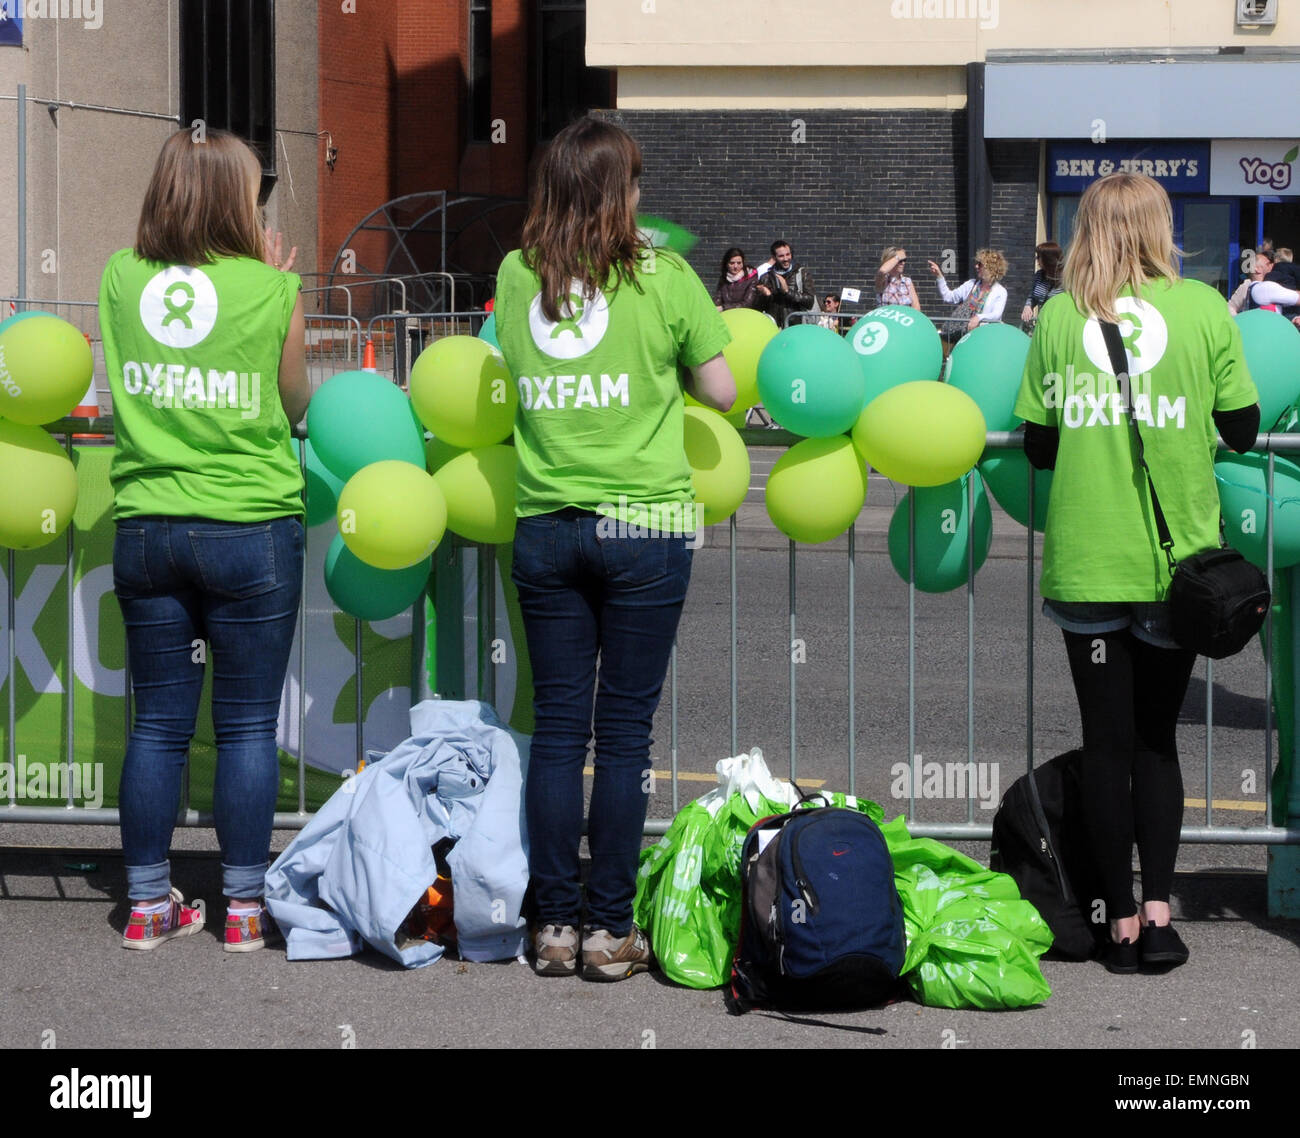 Oxfam volunteers at the Brighton Marathon Stock Photo